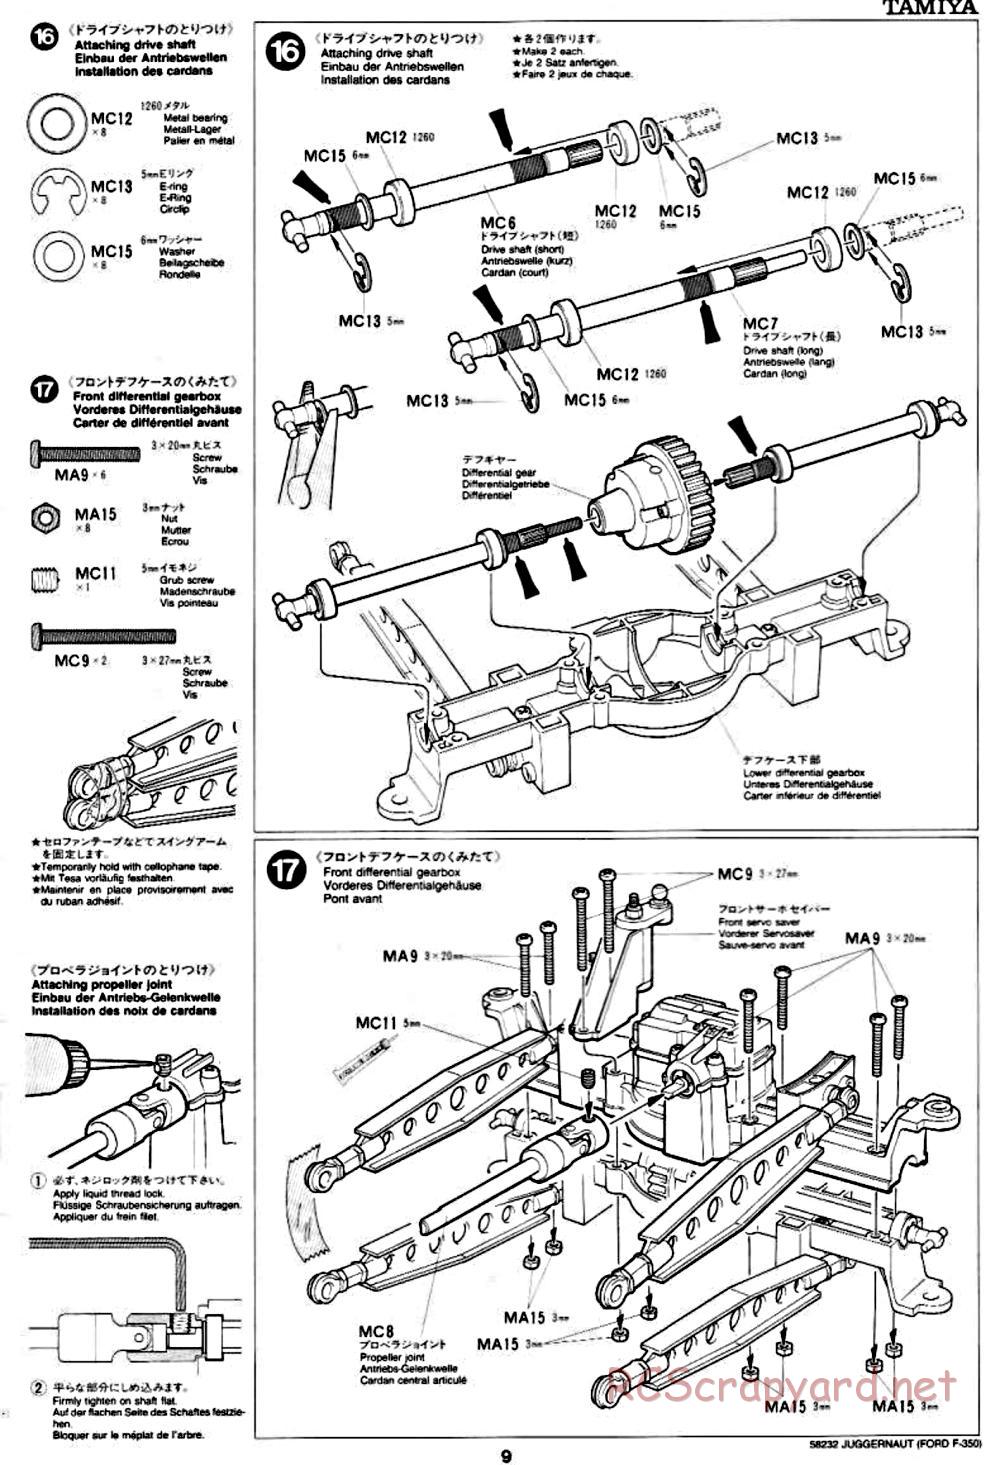 Tamiya - Juggernaut Chassis - Manual - Page 9